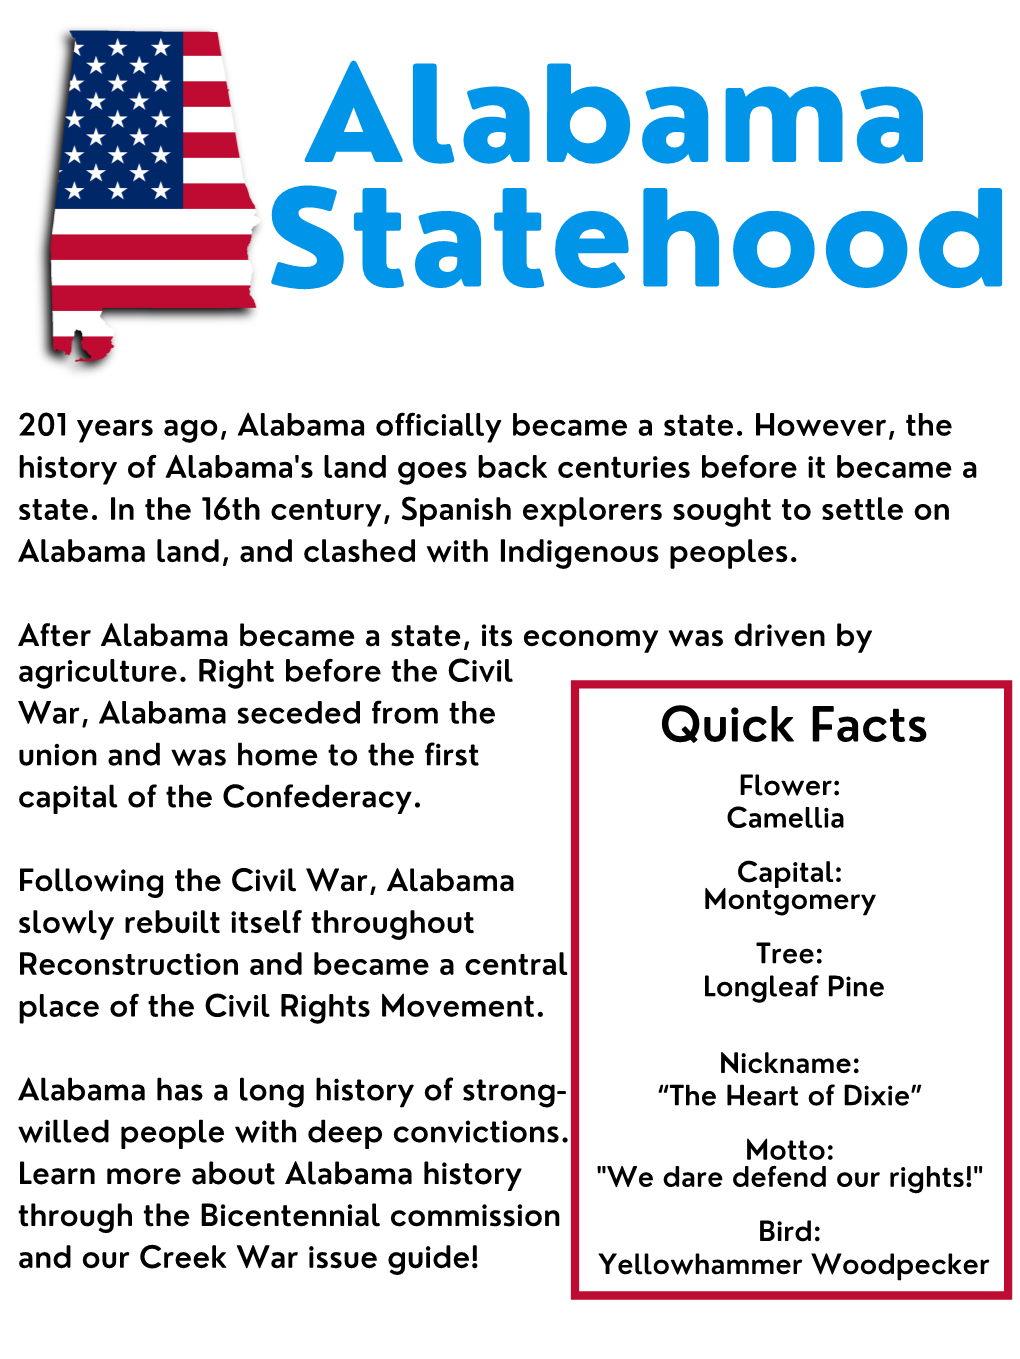 Alabama Statehood